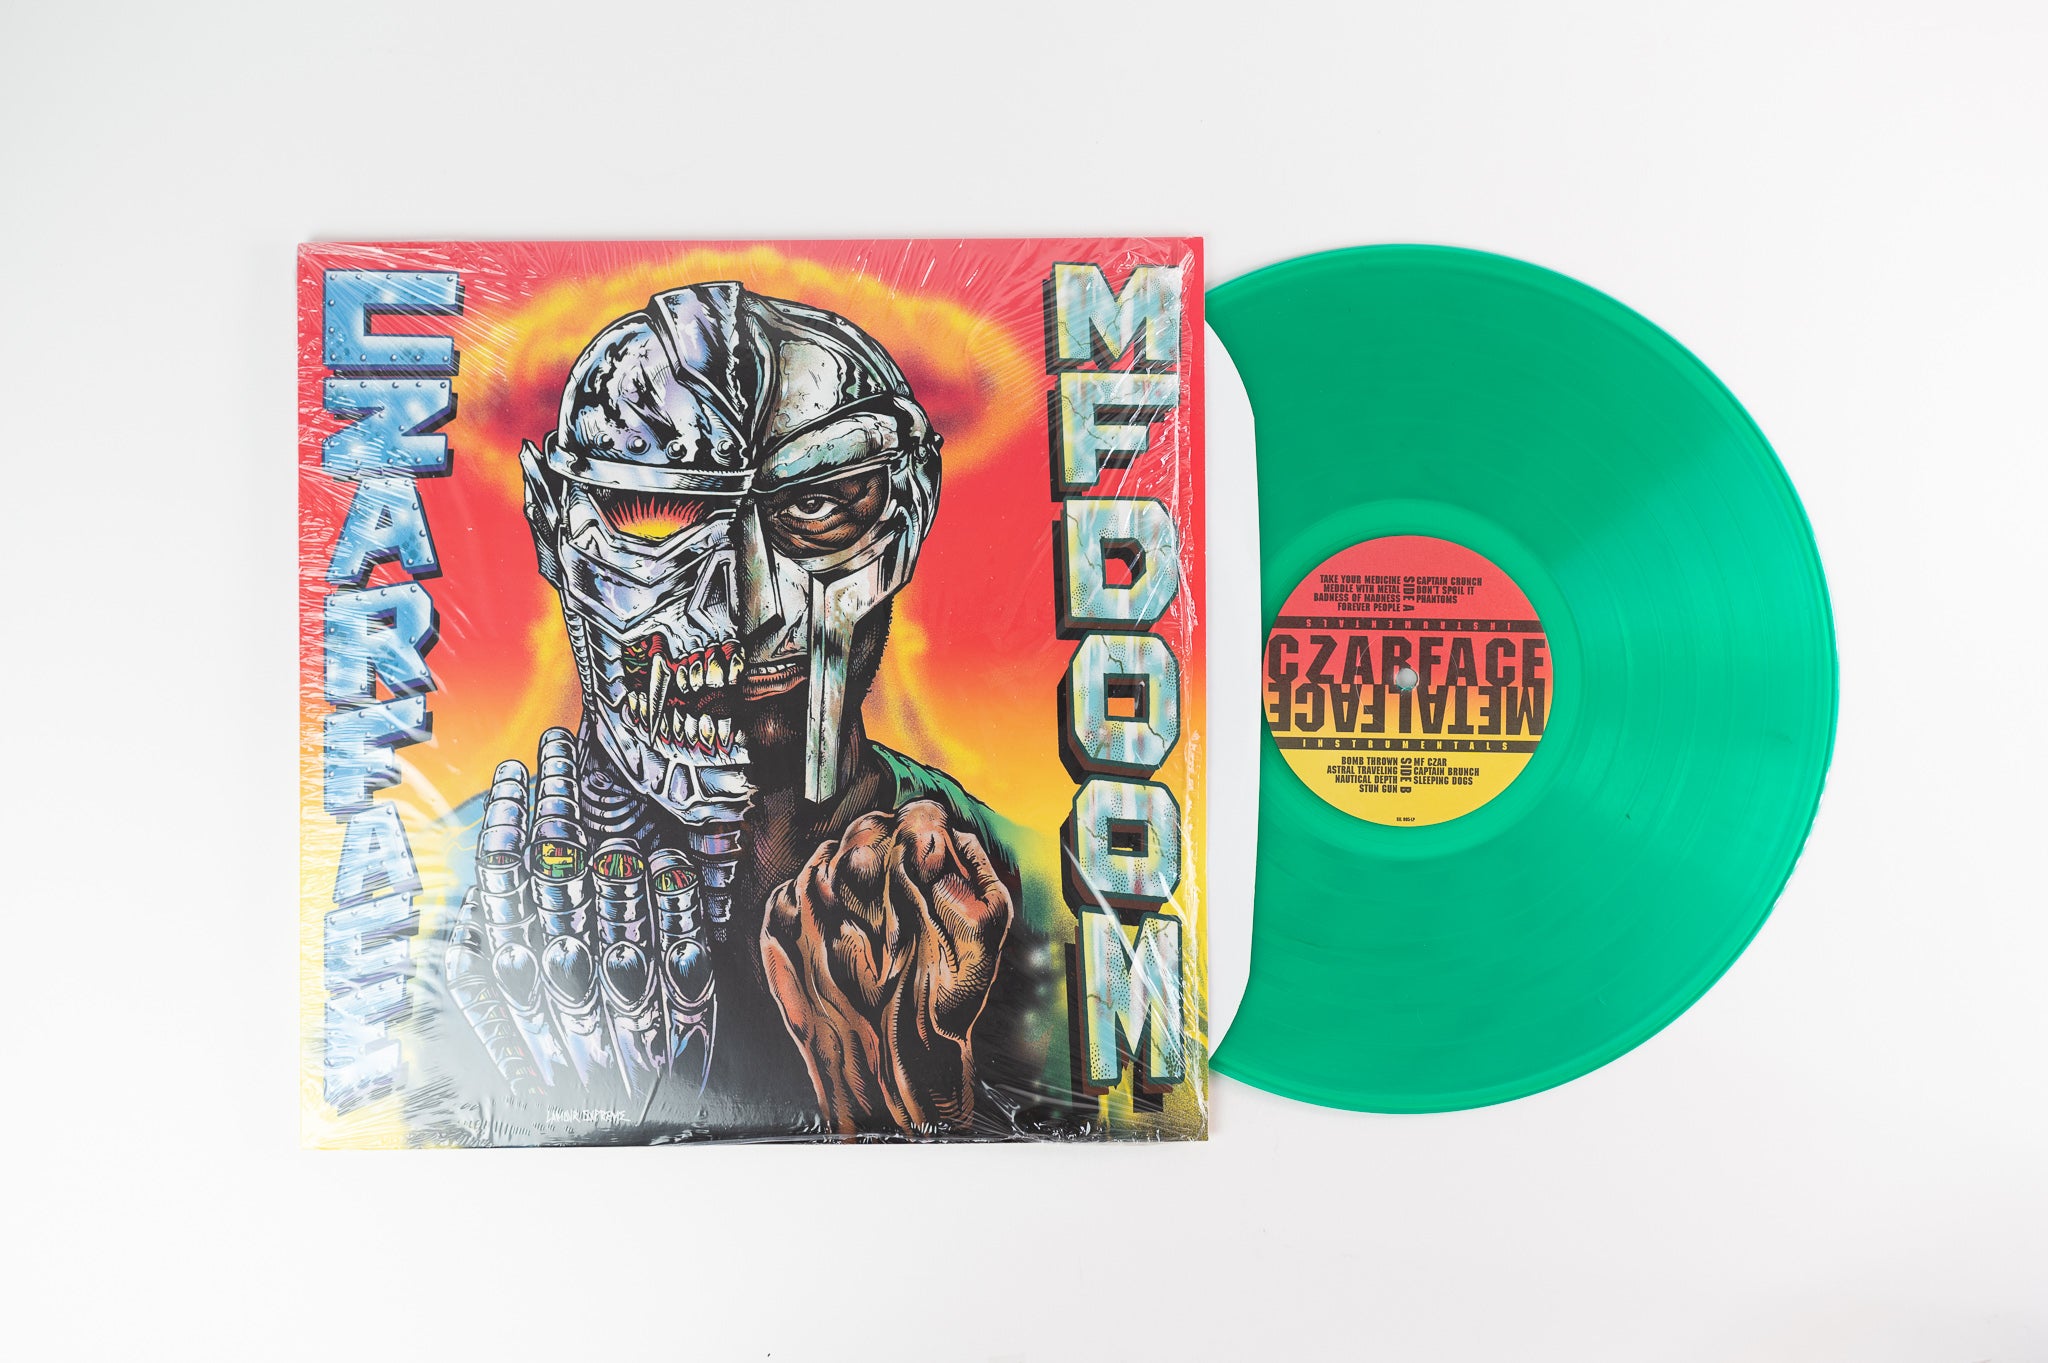 Czarface & MF Doom - Czarface Meets Metal Face on Silver Age Green & Blue Vinyl